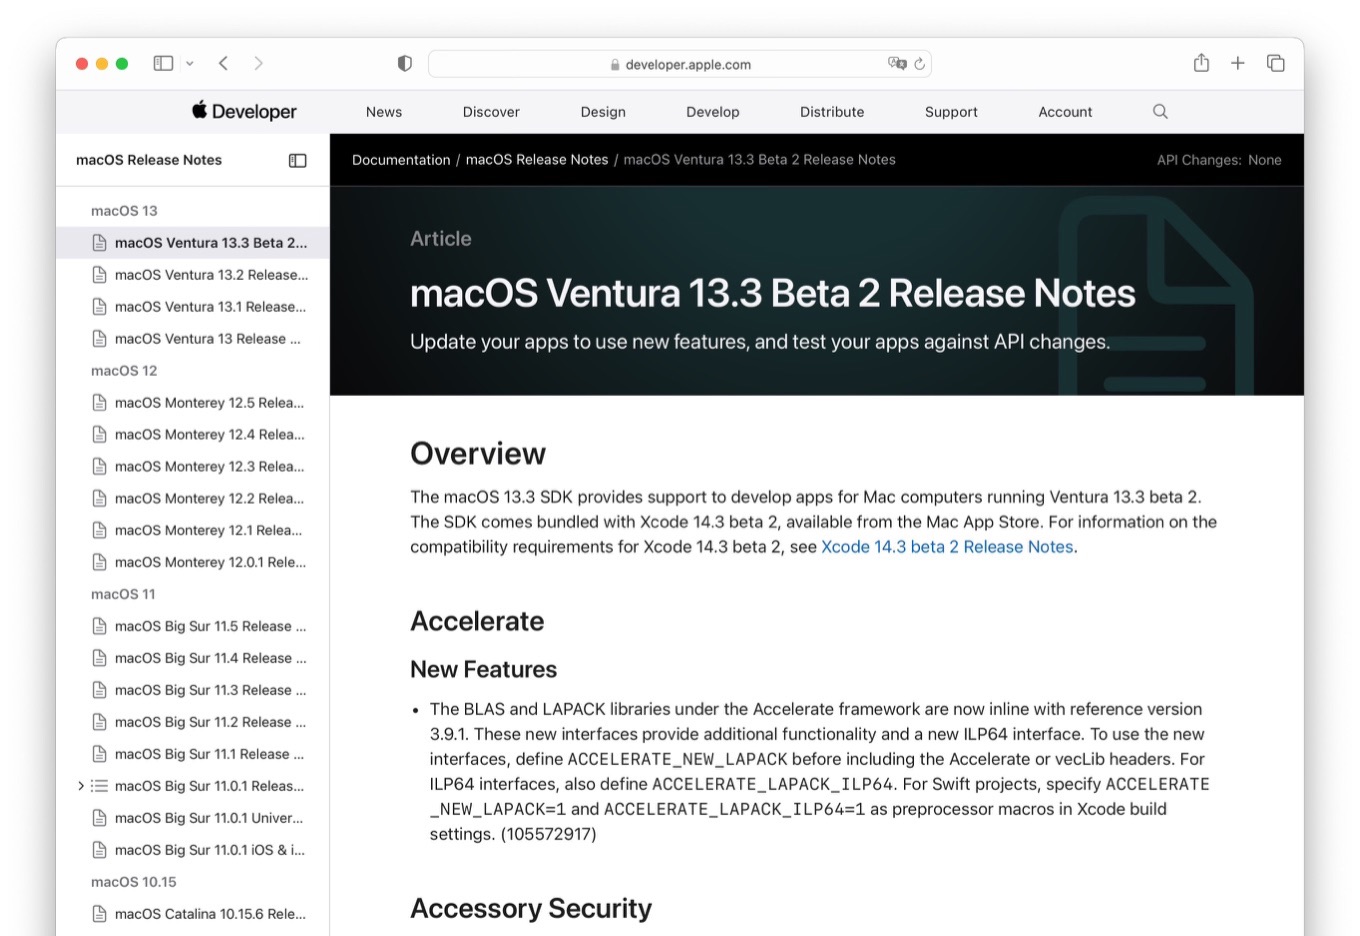 macOS Ventura 13.3 Beta 2 Release Notes